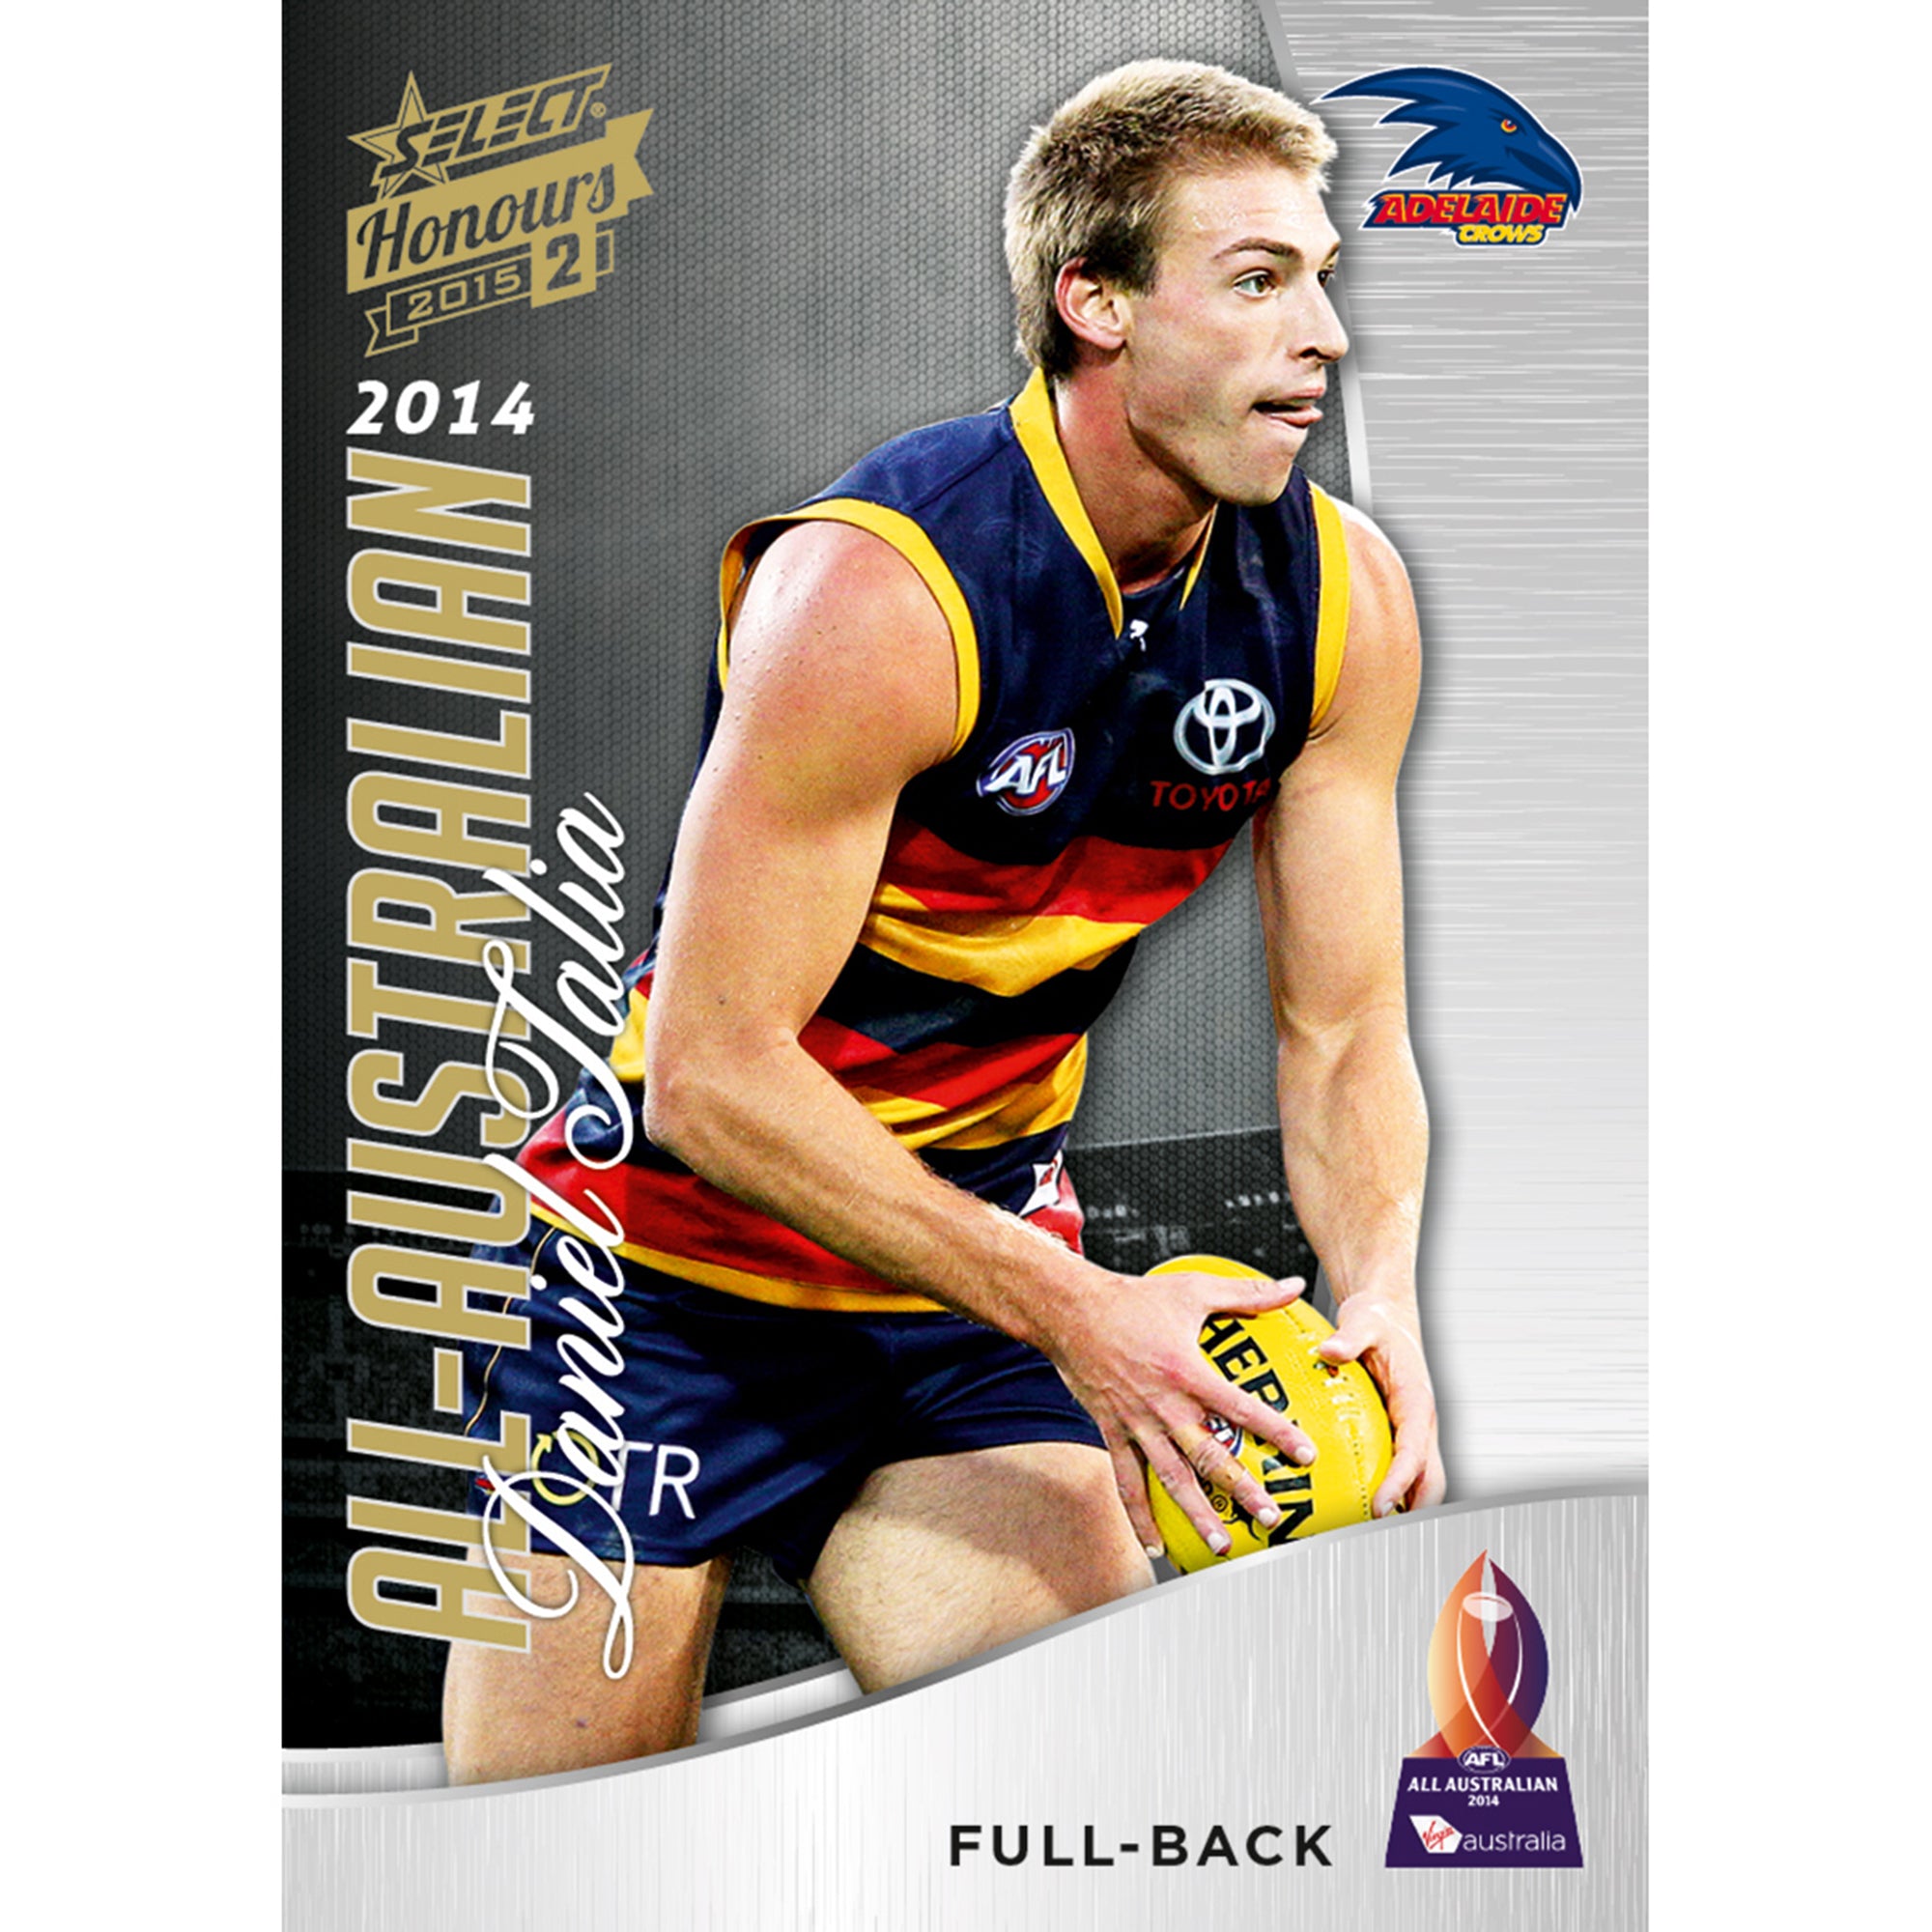 AFL Select Australia 2015 Honours 2 - All Australian Daniel Talia Adelaide AA2